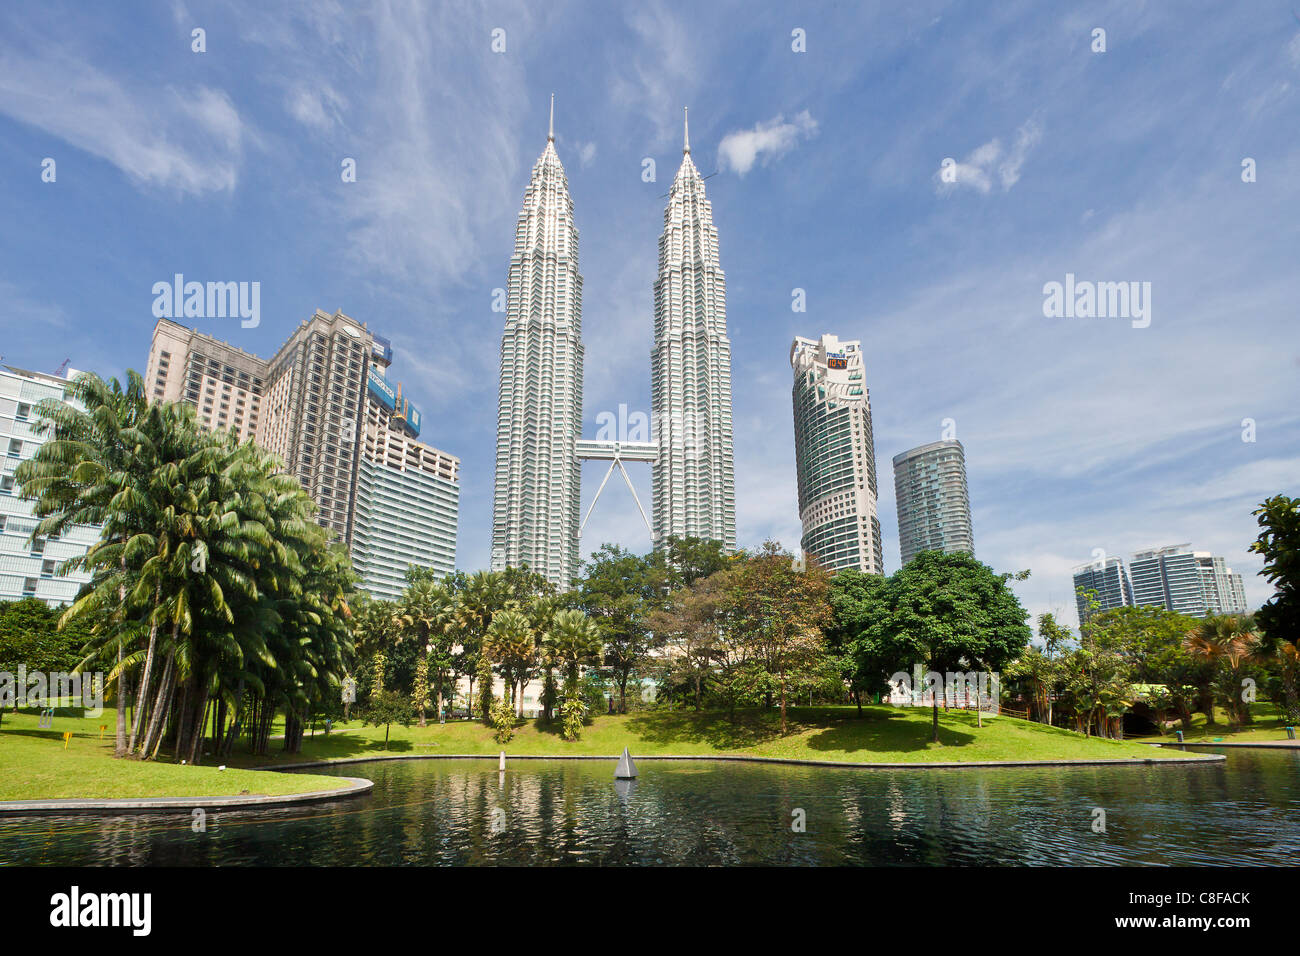 Malaysia, Asien, Kuala Lumpur, Stadt, Stadt, Petronas Towers, Architektur, modern, Teich, Spielzeug Boot, grün, Palmen, Park, Park Stockfoto